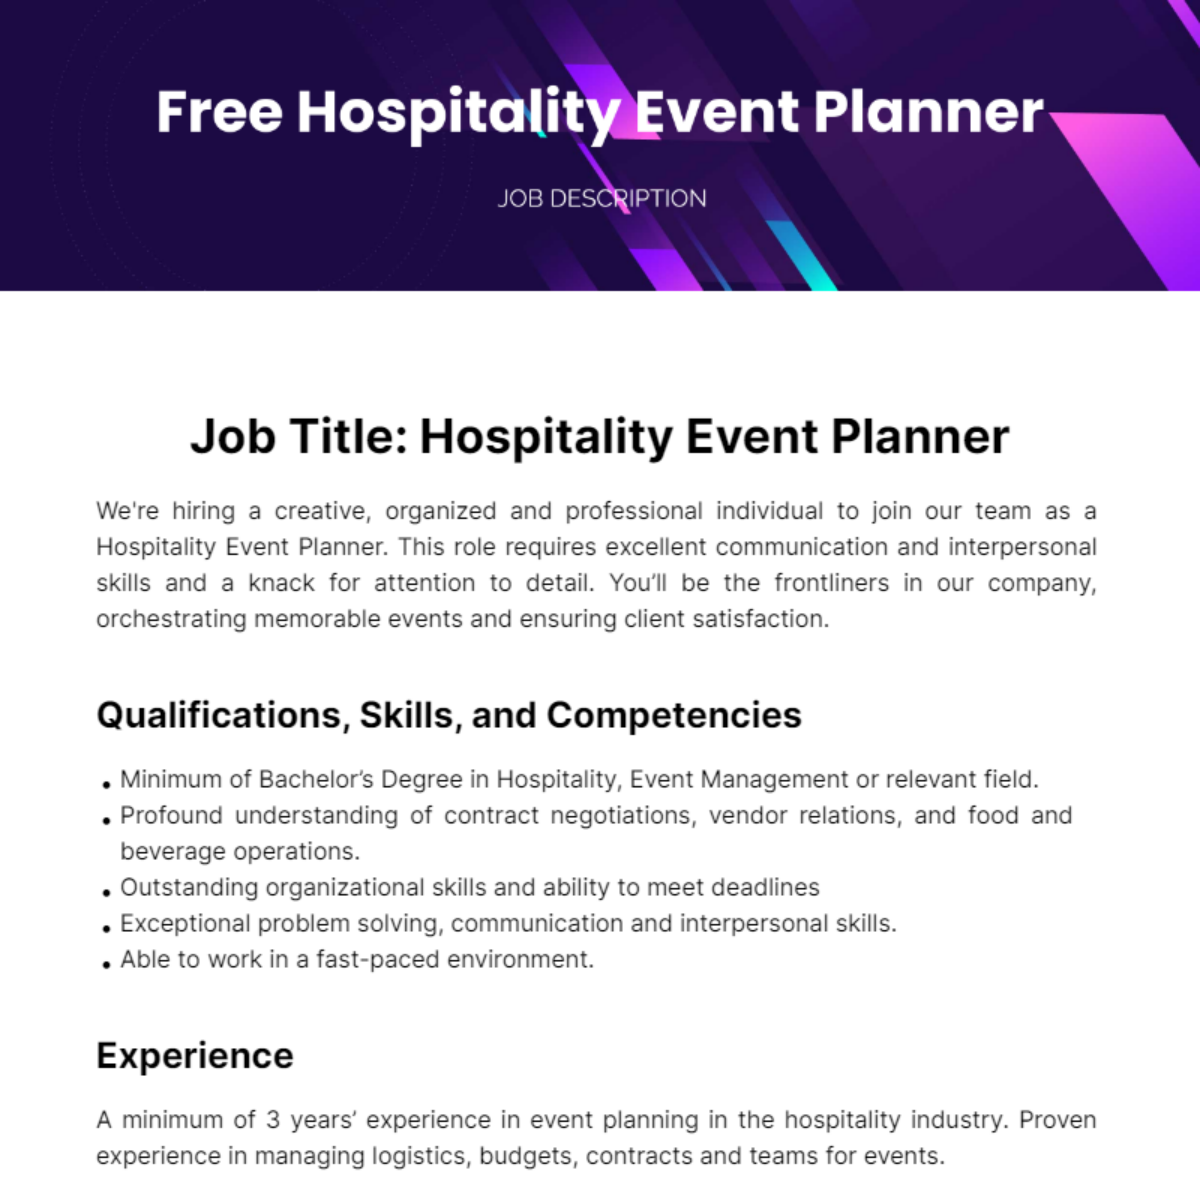 Free Hospitality Event Planner Job Description Template